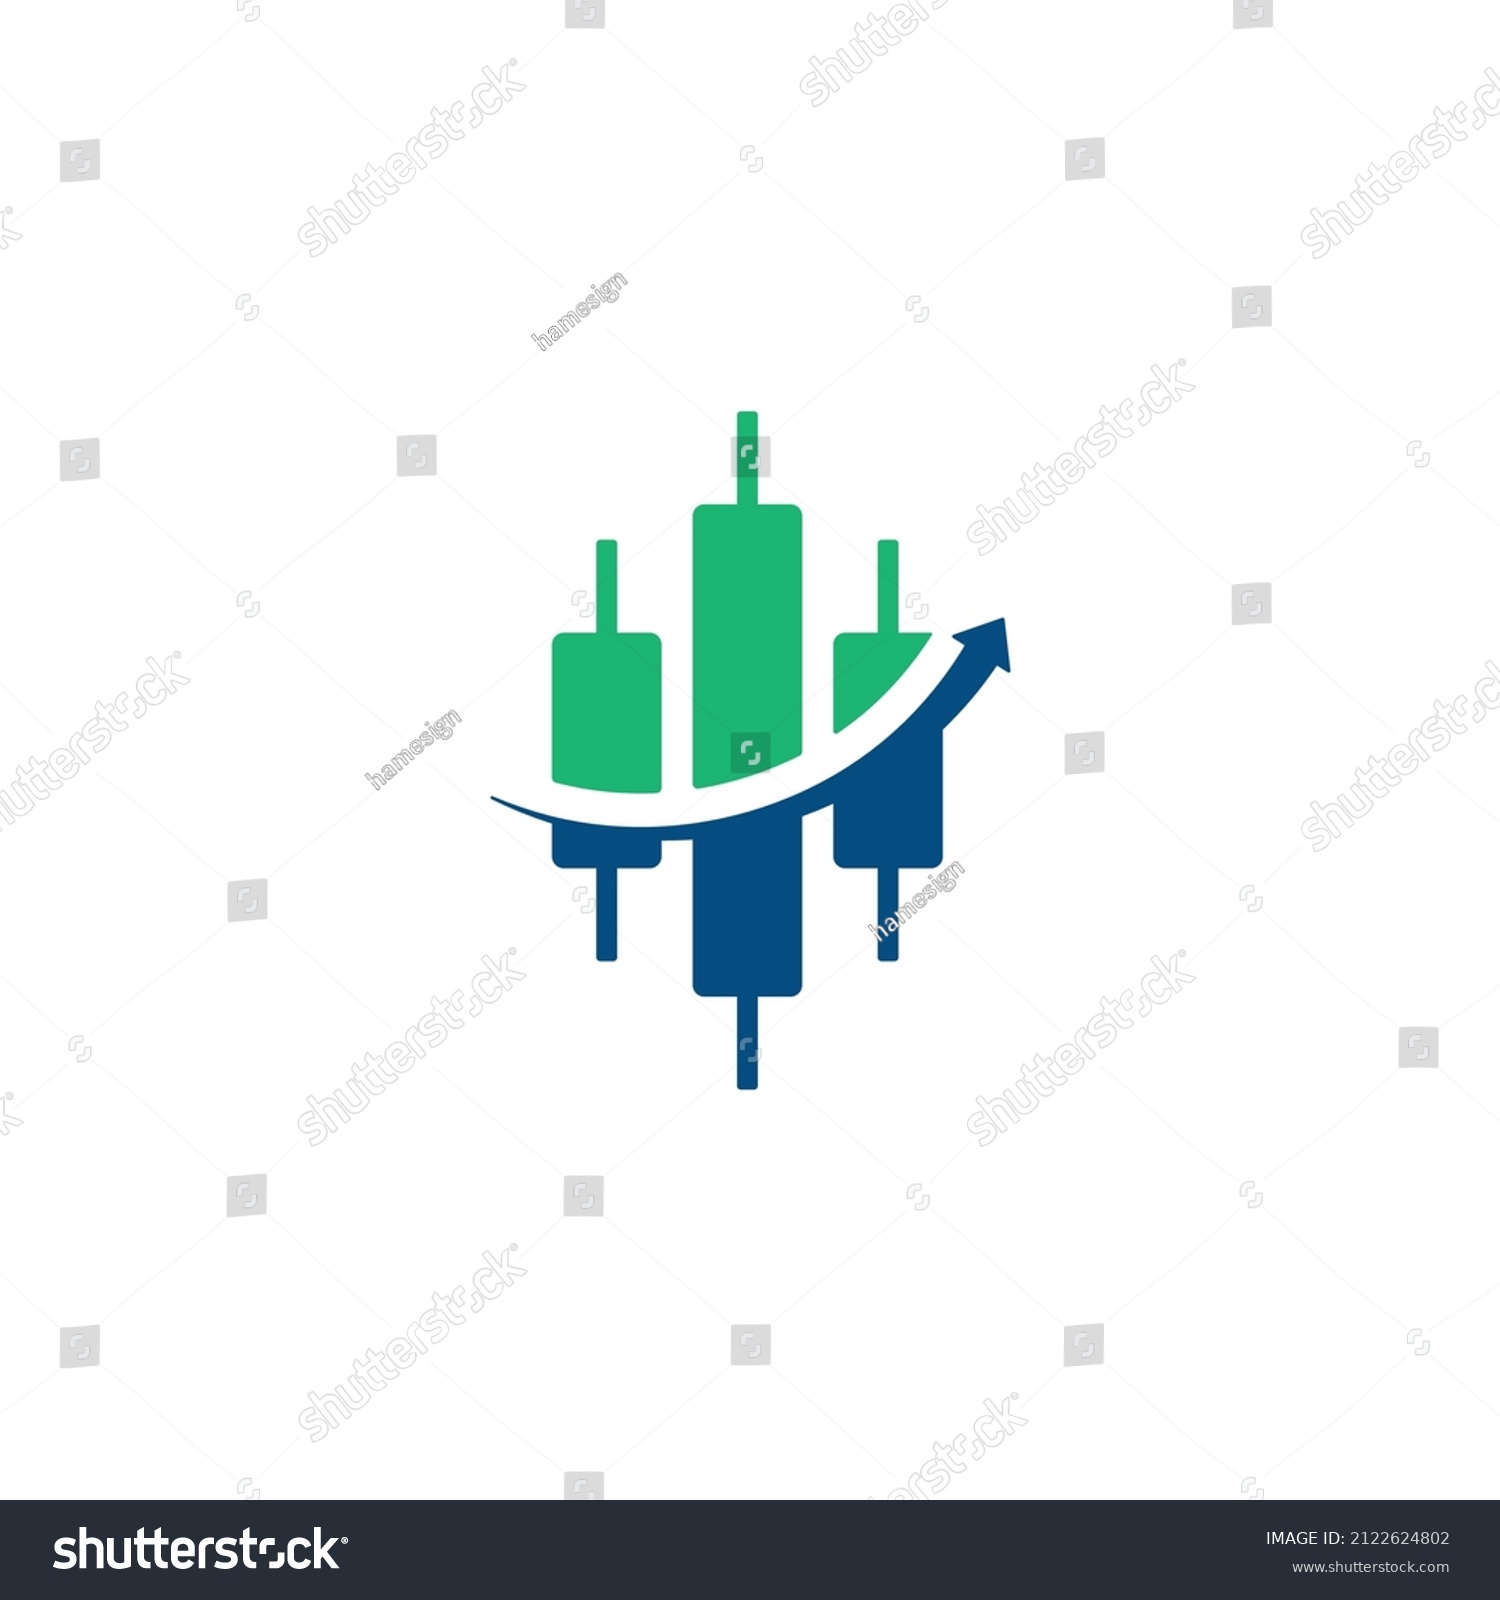 SVG of trading logo vector icon illustration modern design. arrow  logo vector icon illustration modern design. accounting  logo vector icon illustration modern design. candlestick. investment logo.  svg